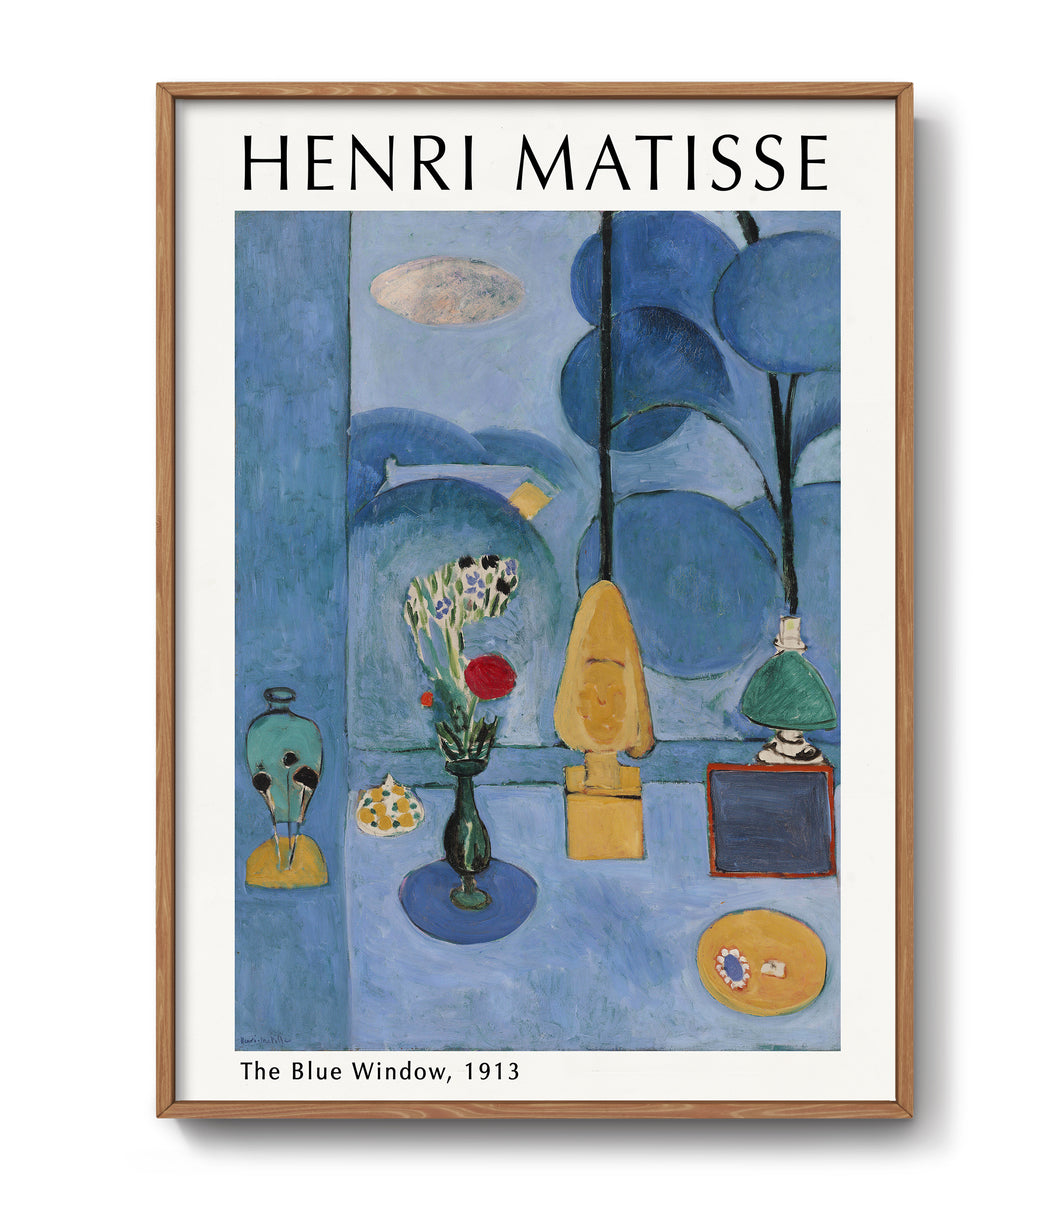 The Blue Window by henri Matisse